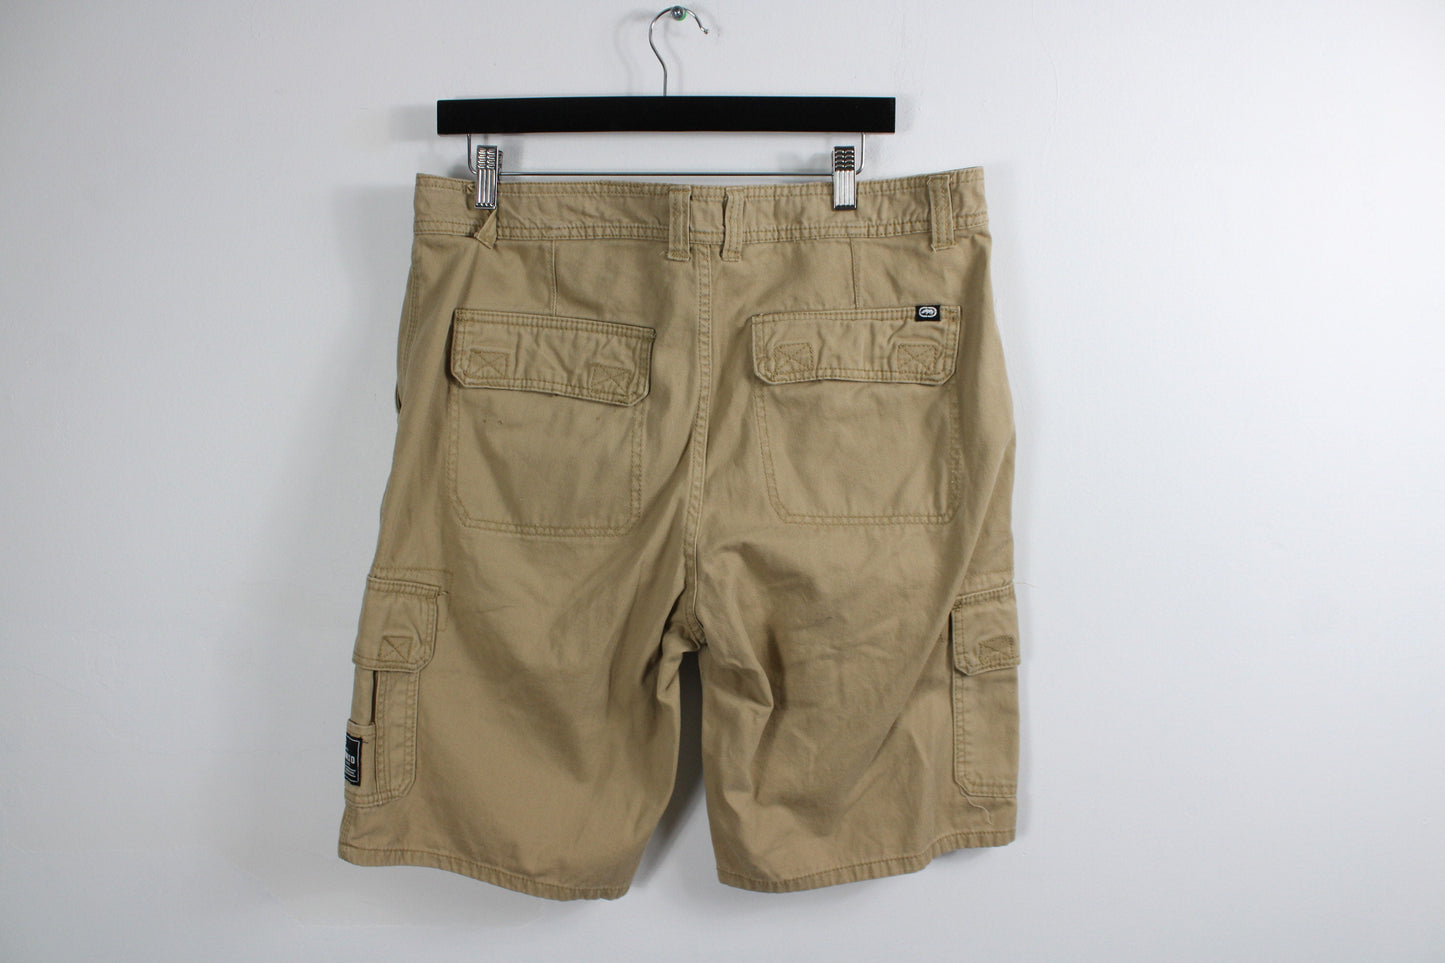 Ecko Jean Shorts / 90s Vintage Cargo Trunks Streetwear / Hip Hop Clothing / Size 34